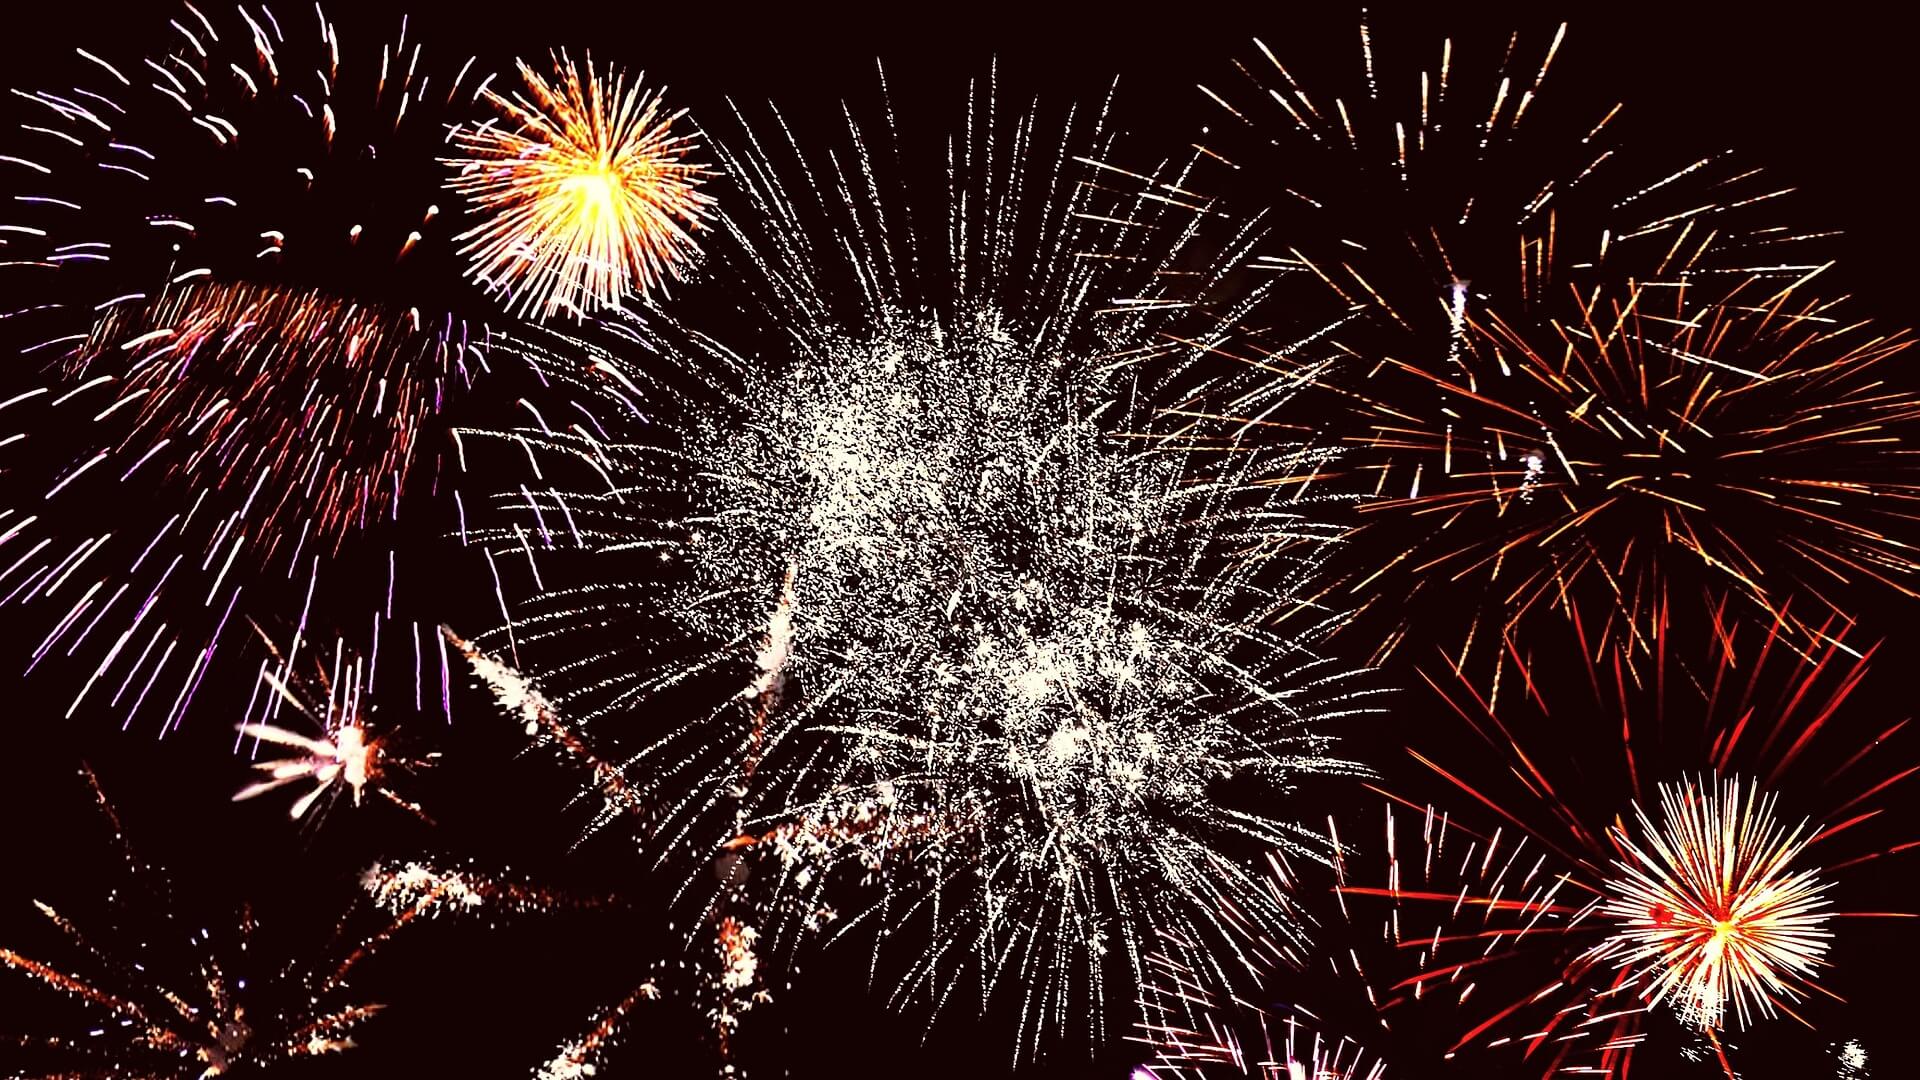 Fireworks by Lumpi pixabay